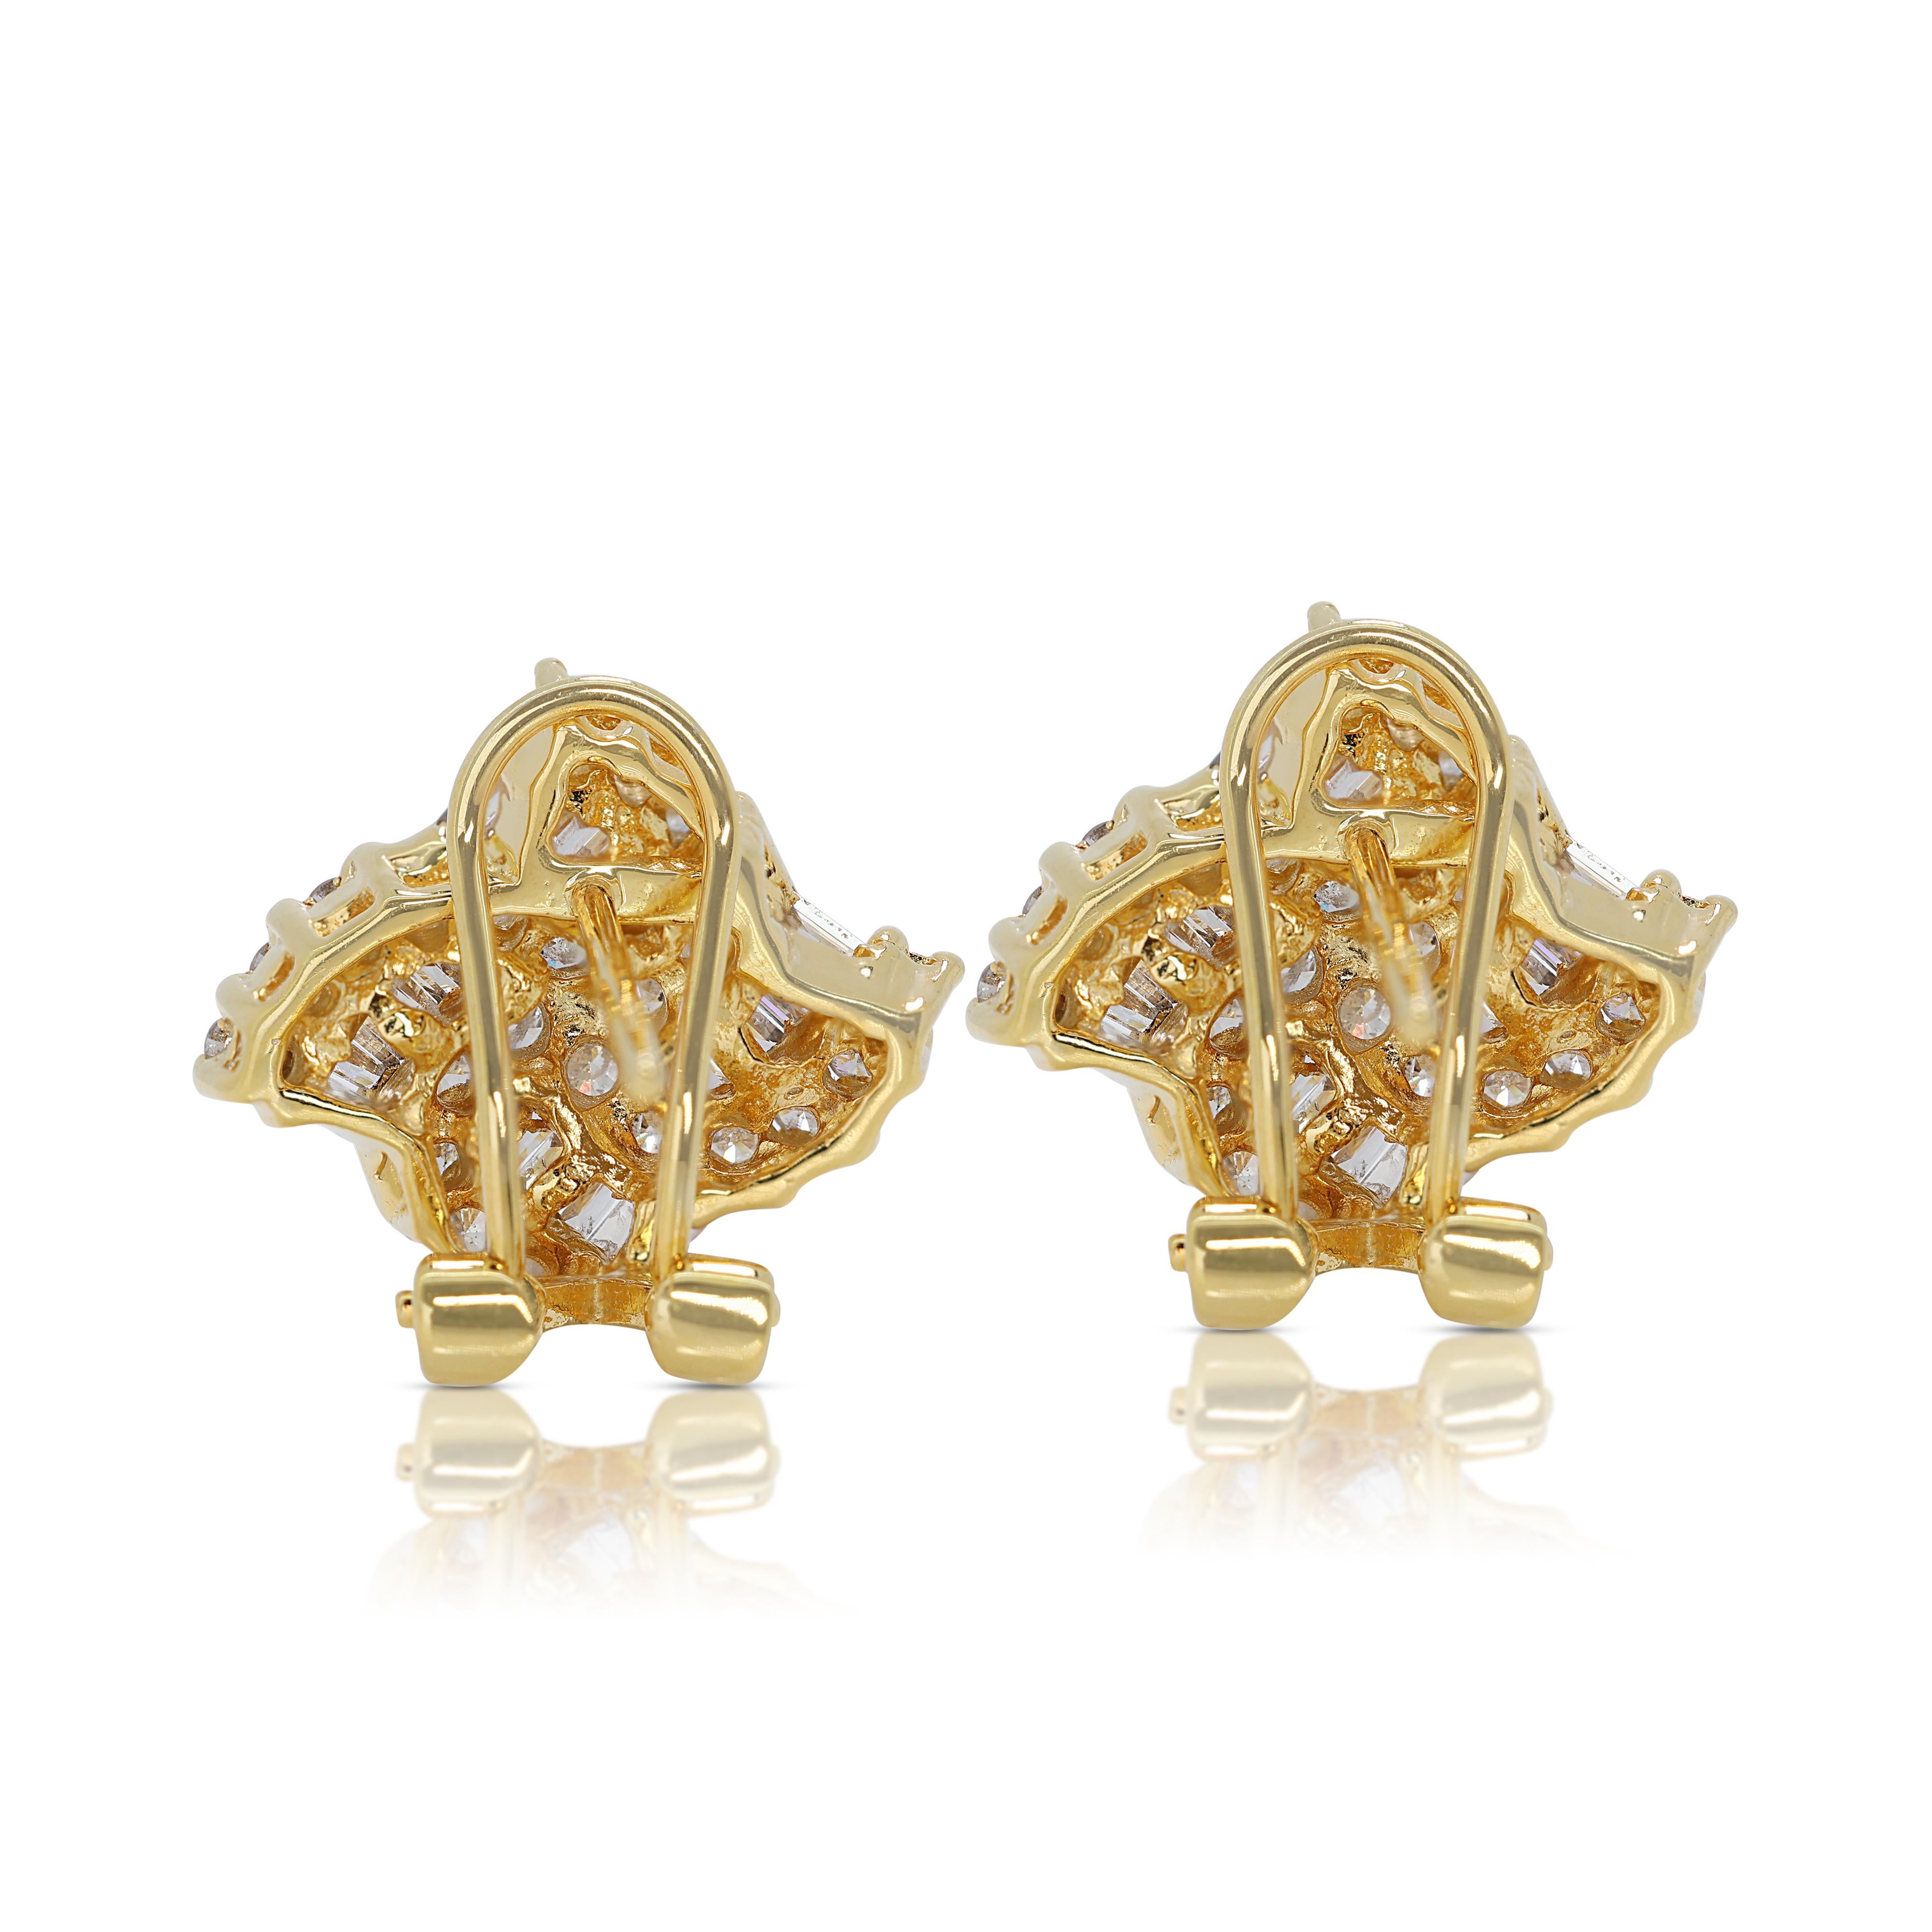 Elegant 0.84ct Diamonds Earrings in 18K Yellow Gold For Sale 2